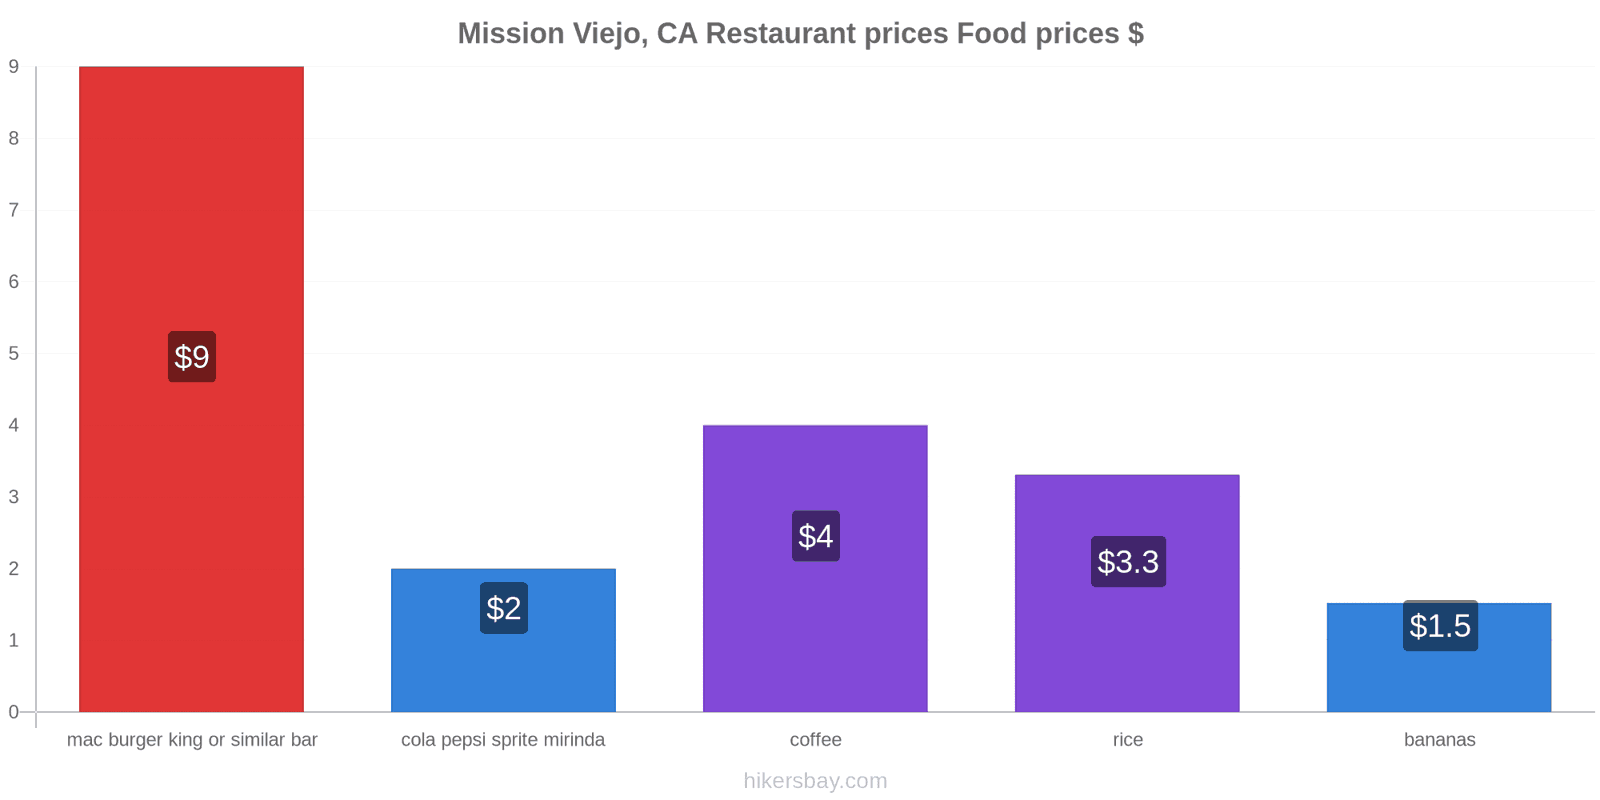 Mission Viejo, CA price changes hikersbay.com